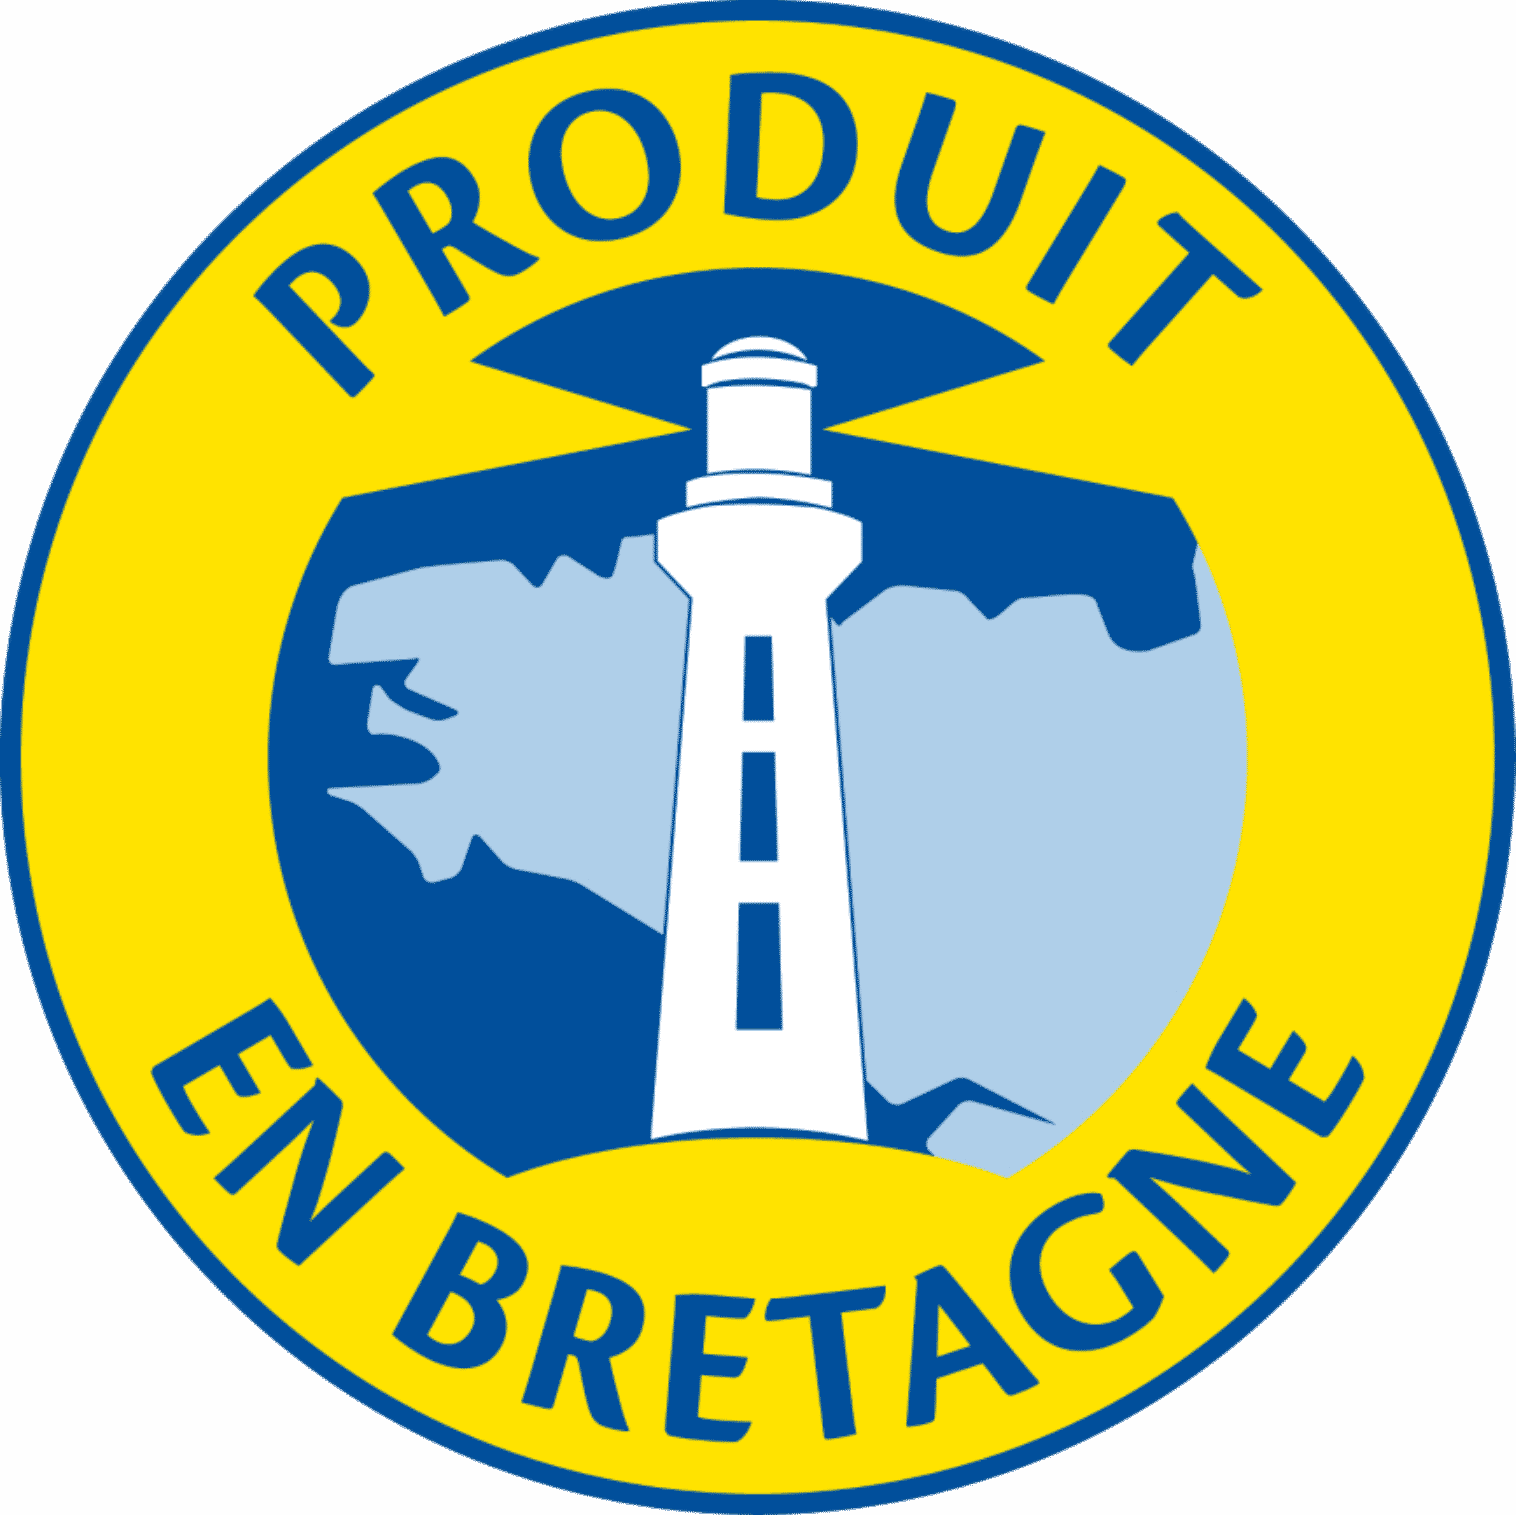 Icone Produits en Bretagne